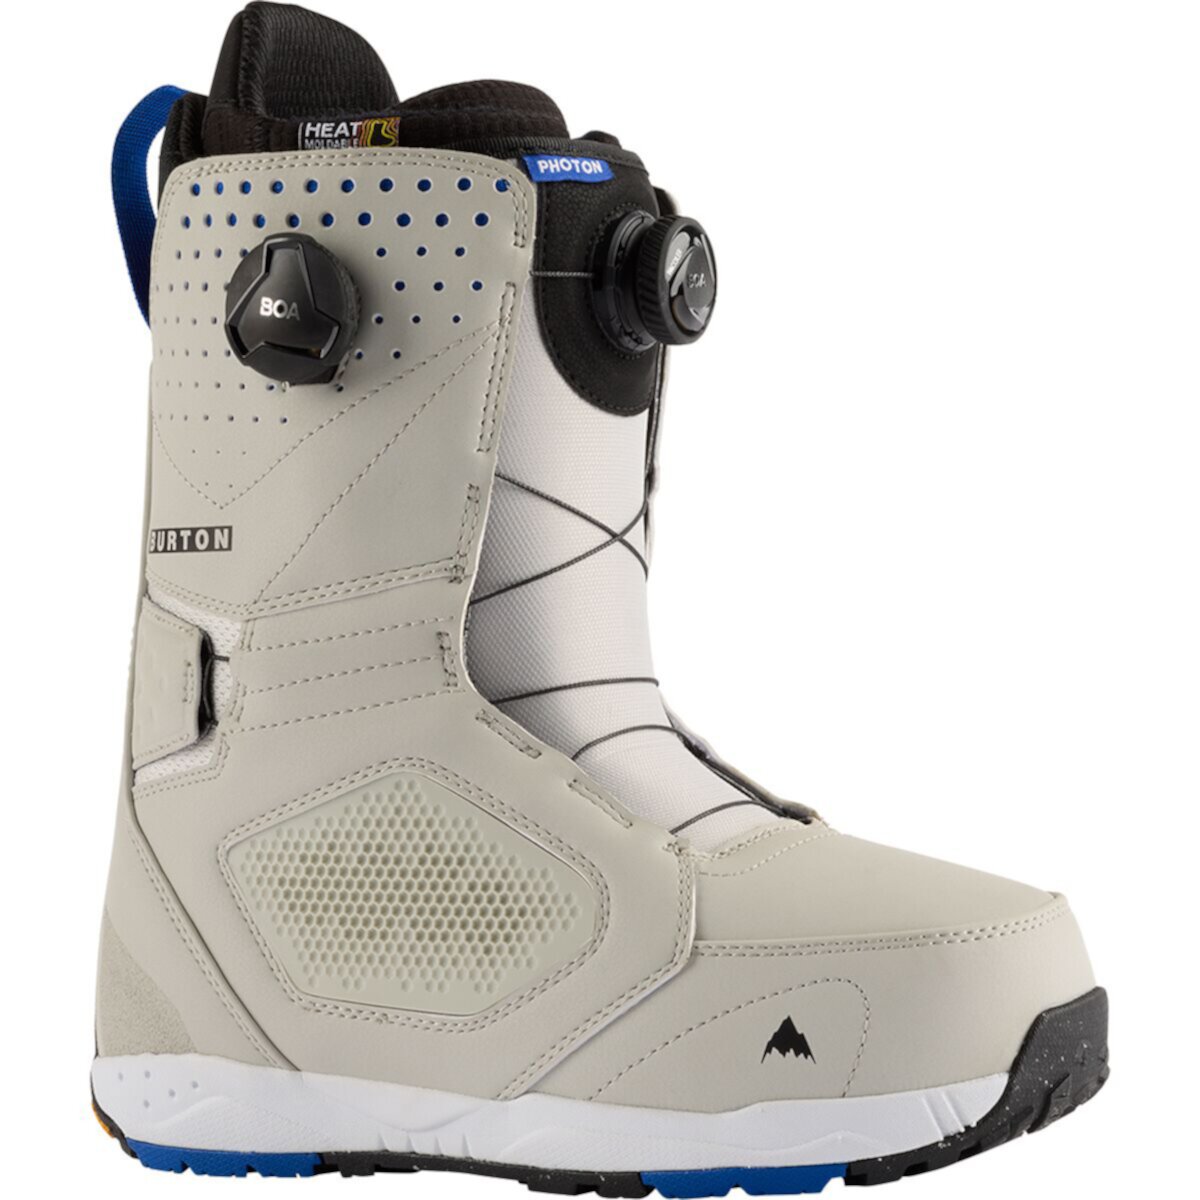 Ботинки для сноуборда Photon BOA - 2023 Burton